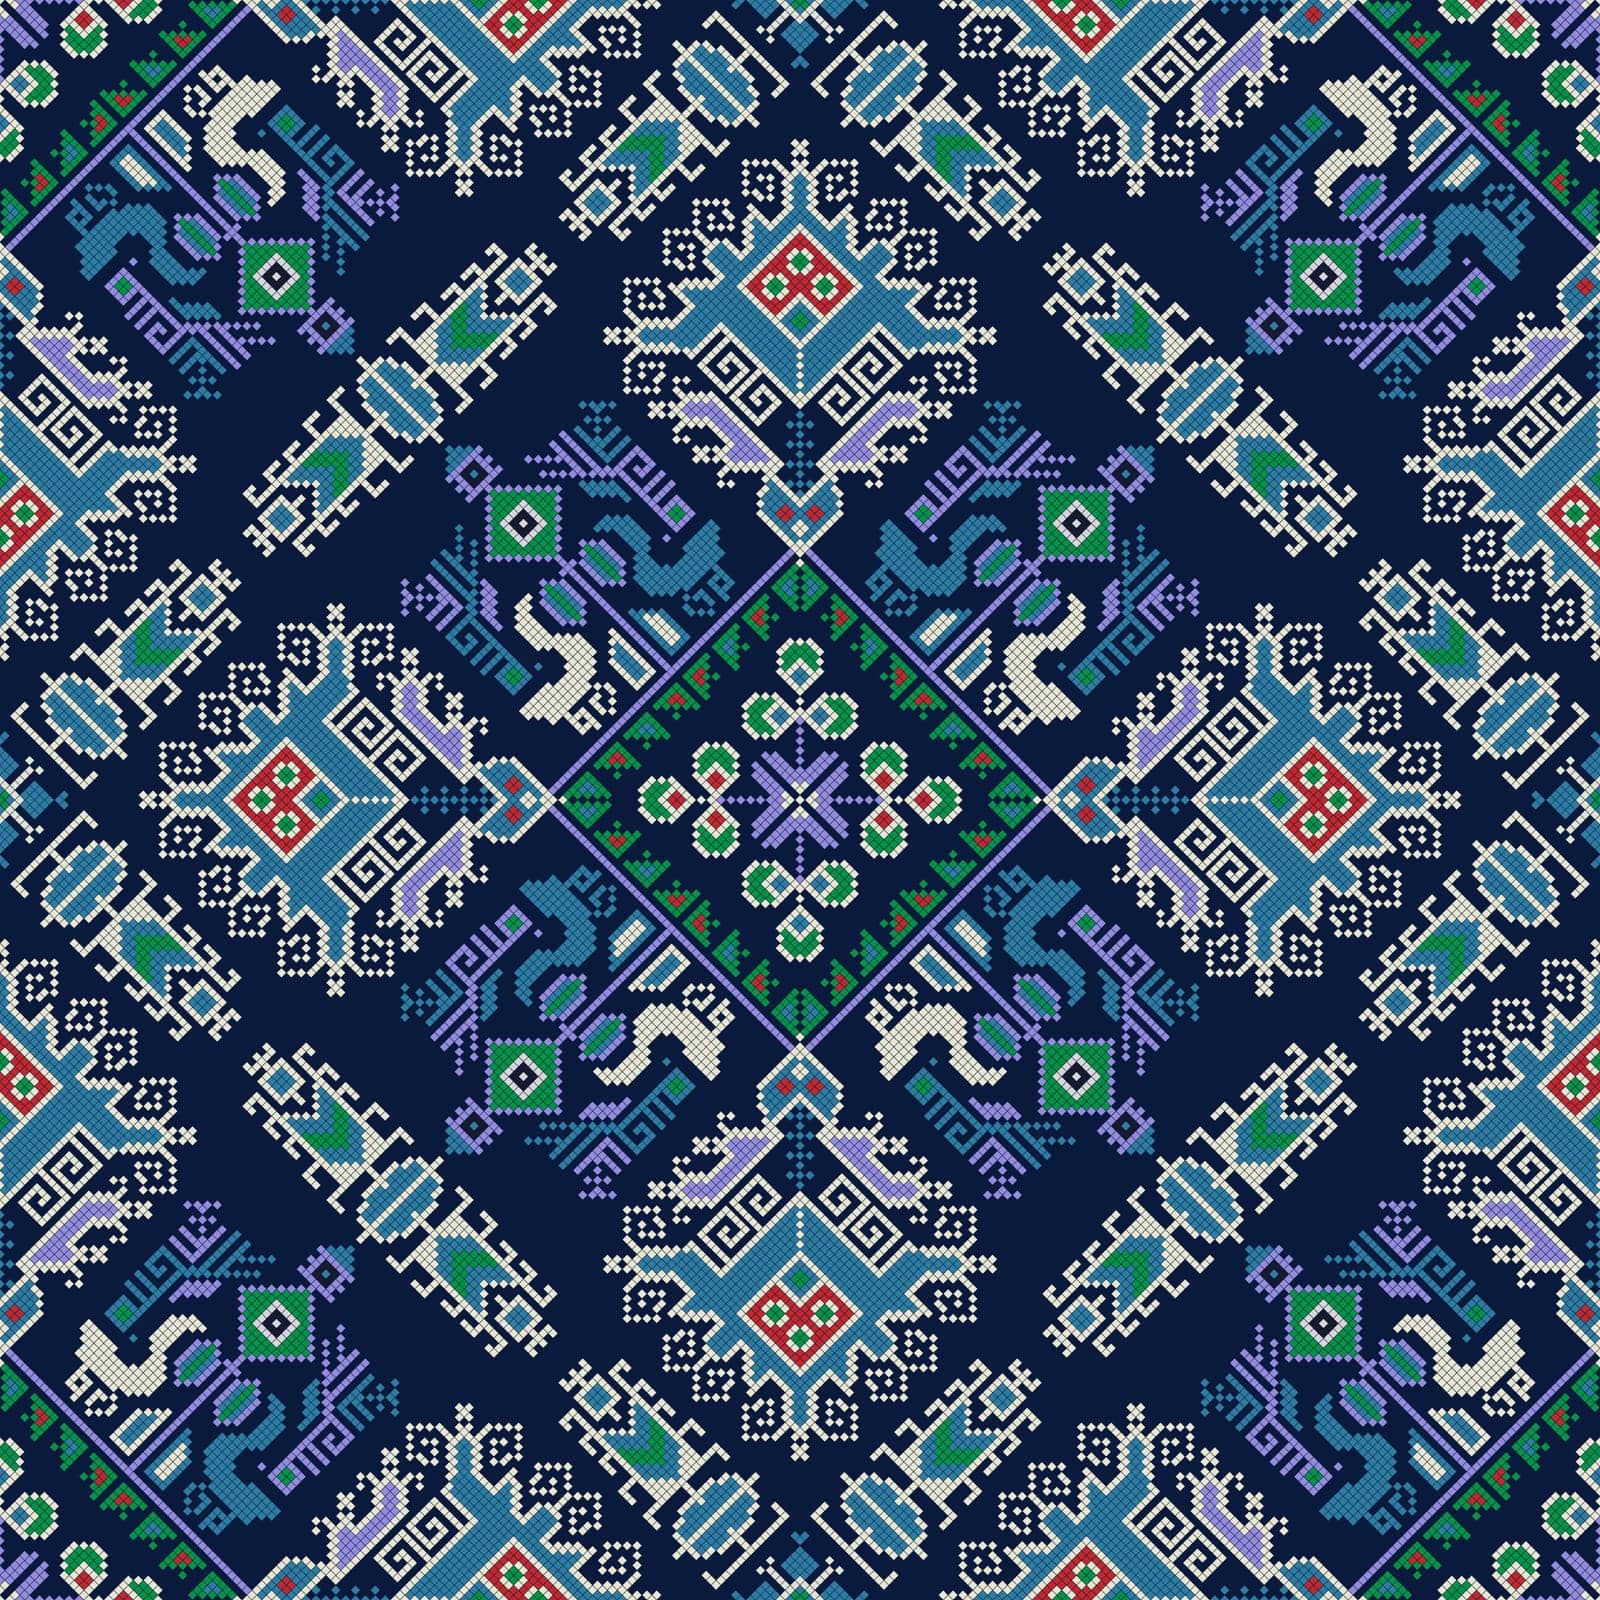 Bulgarian embroidery pattern 91 by Lirch